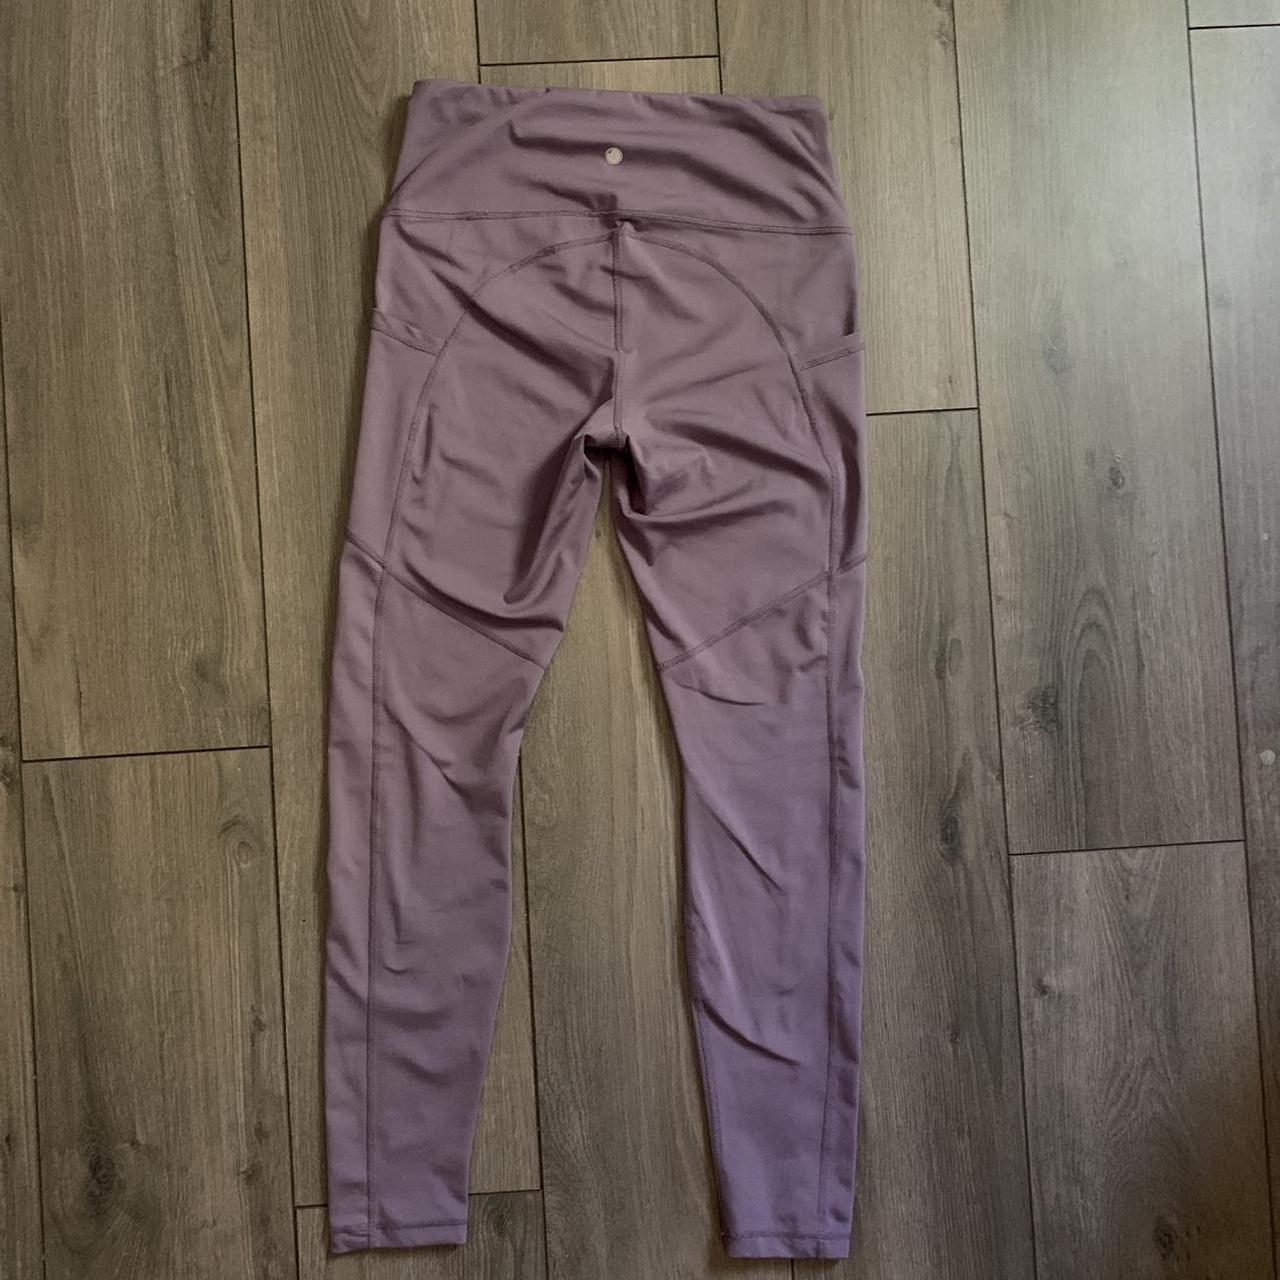 Ultra soft lavender leggings by Yogalicious Lux! - Depop